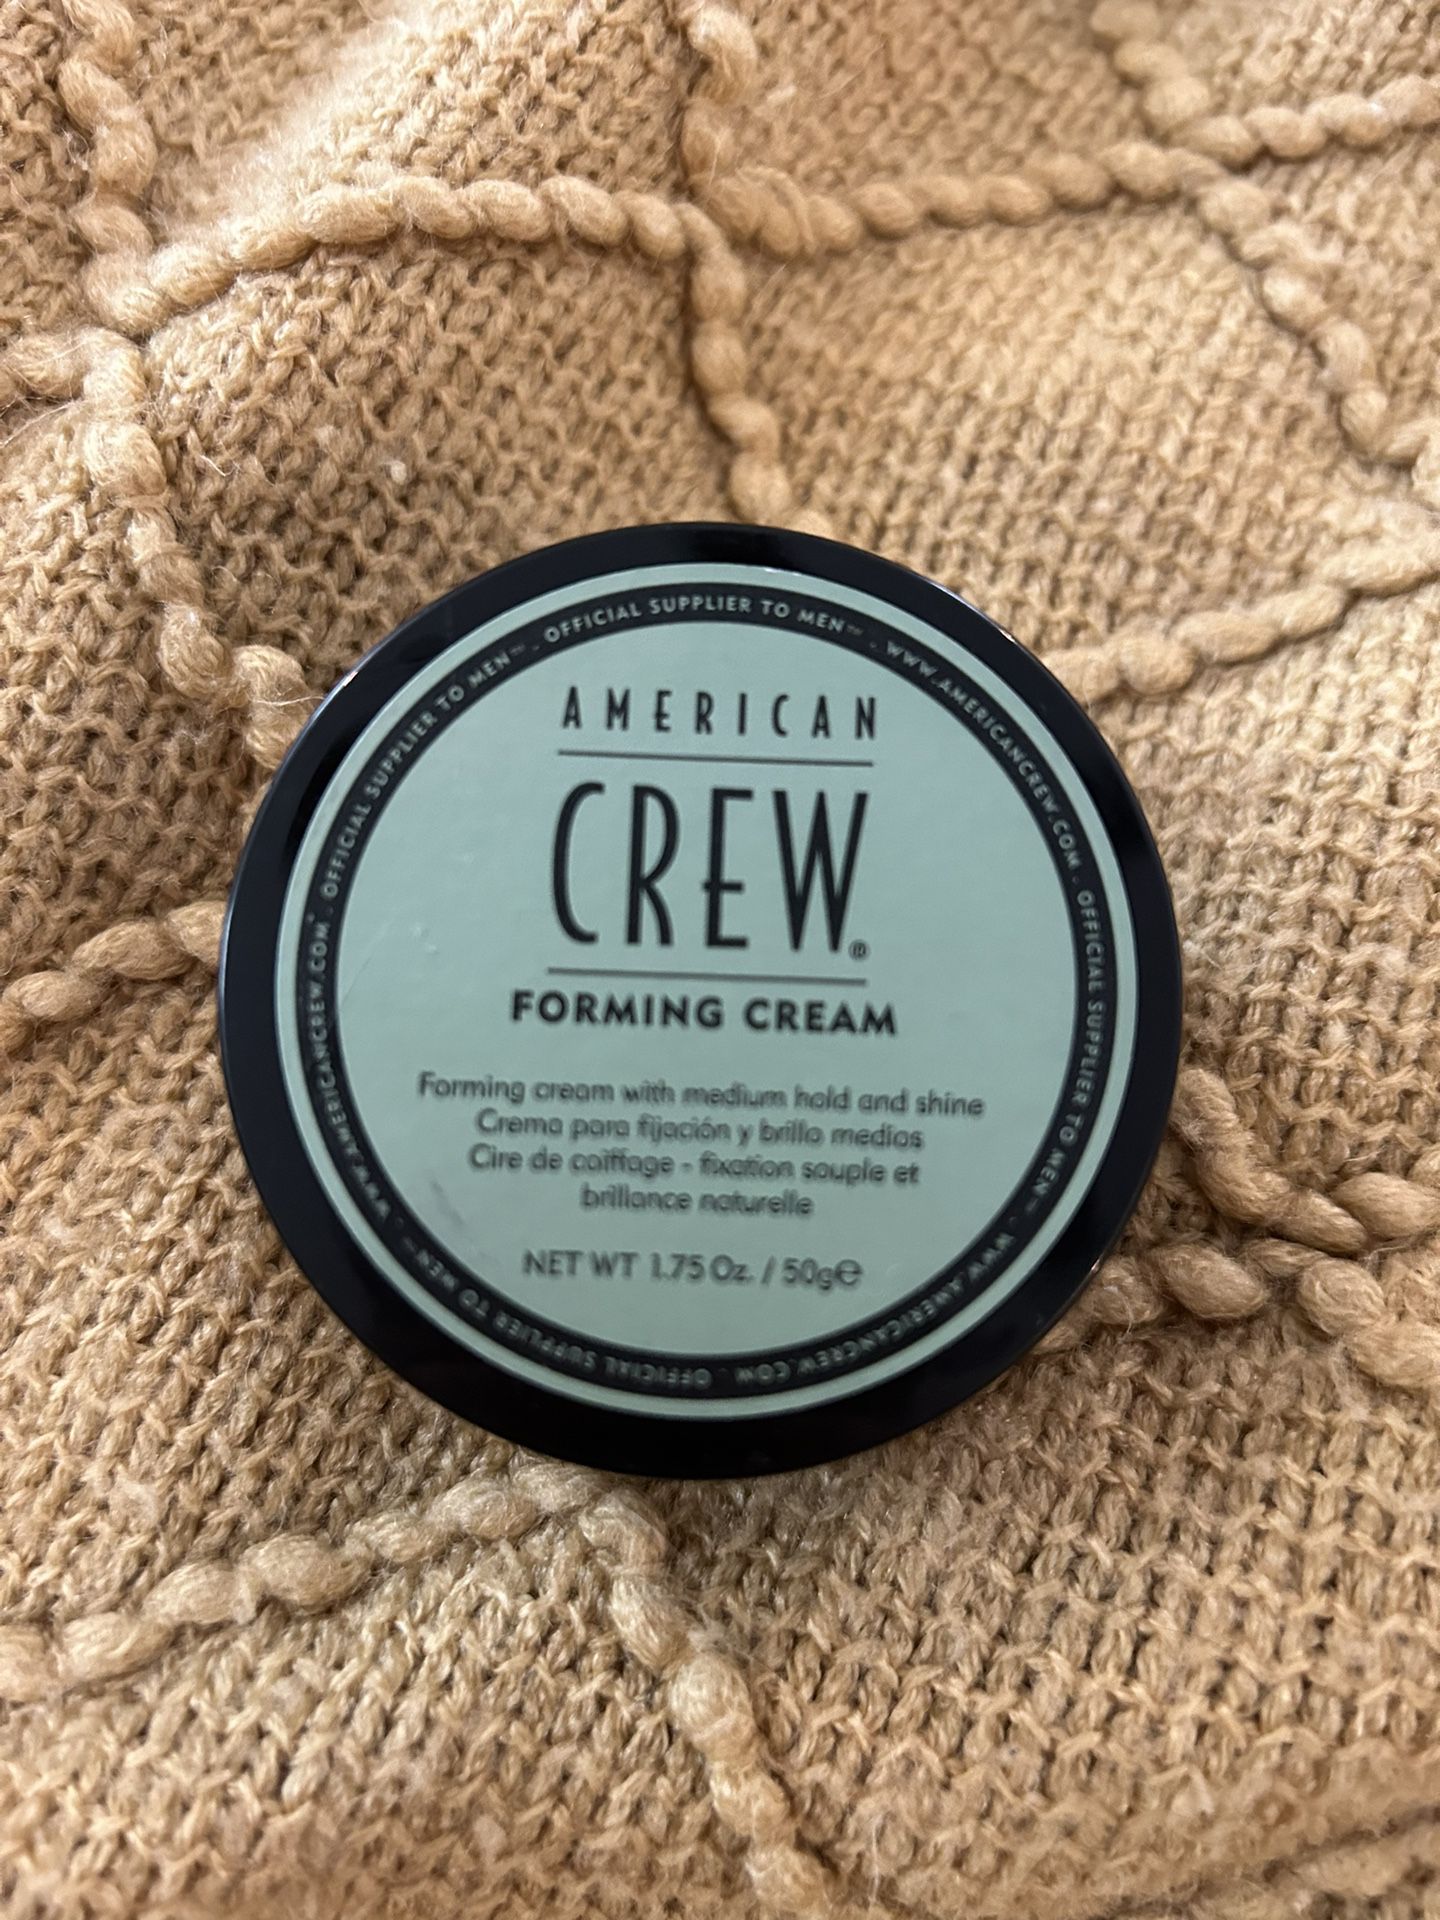 AMERICAN CREW Forming Cream 1.75 oz